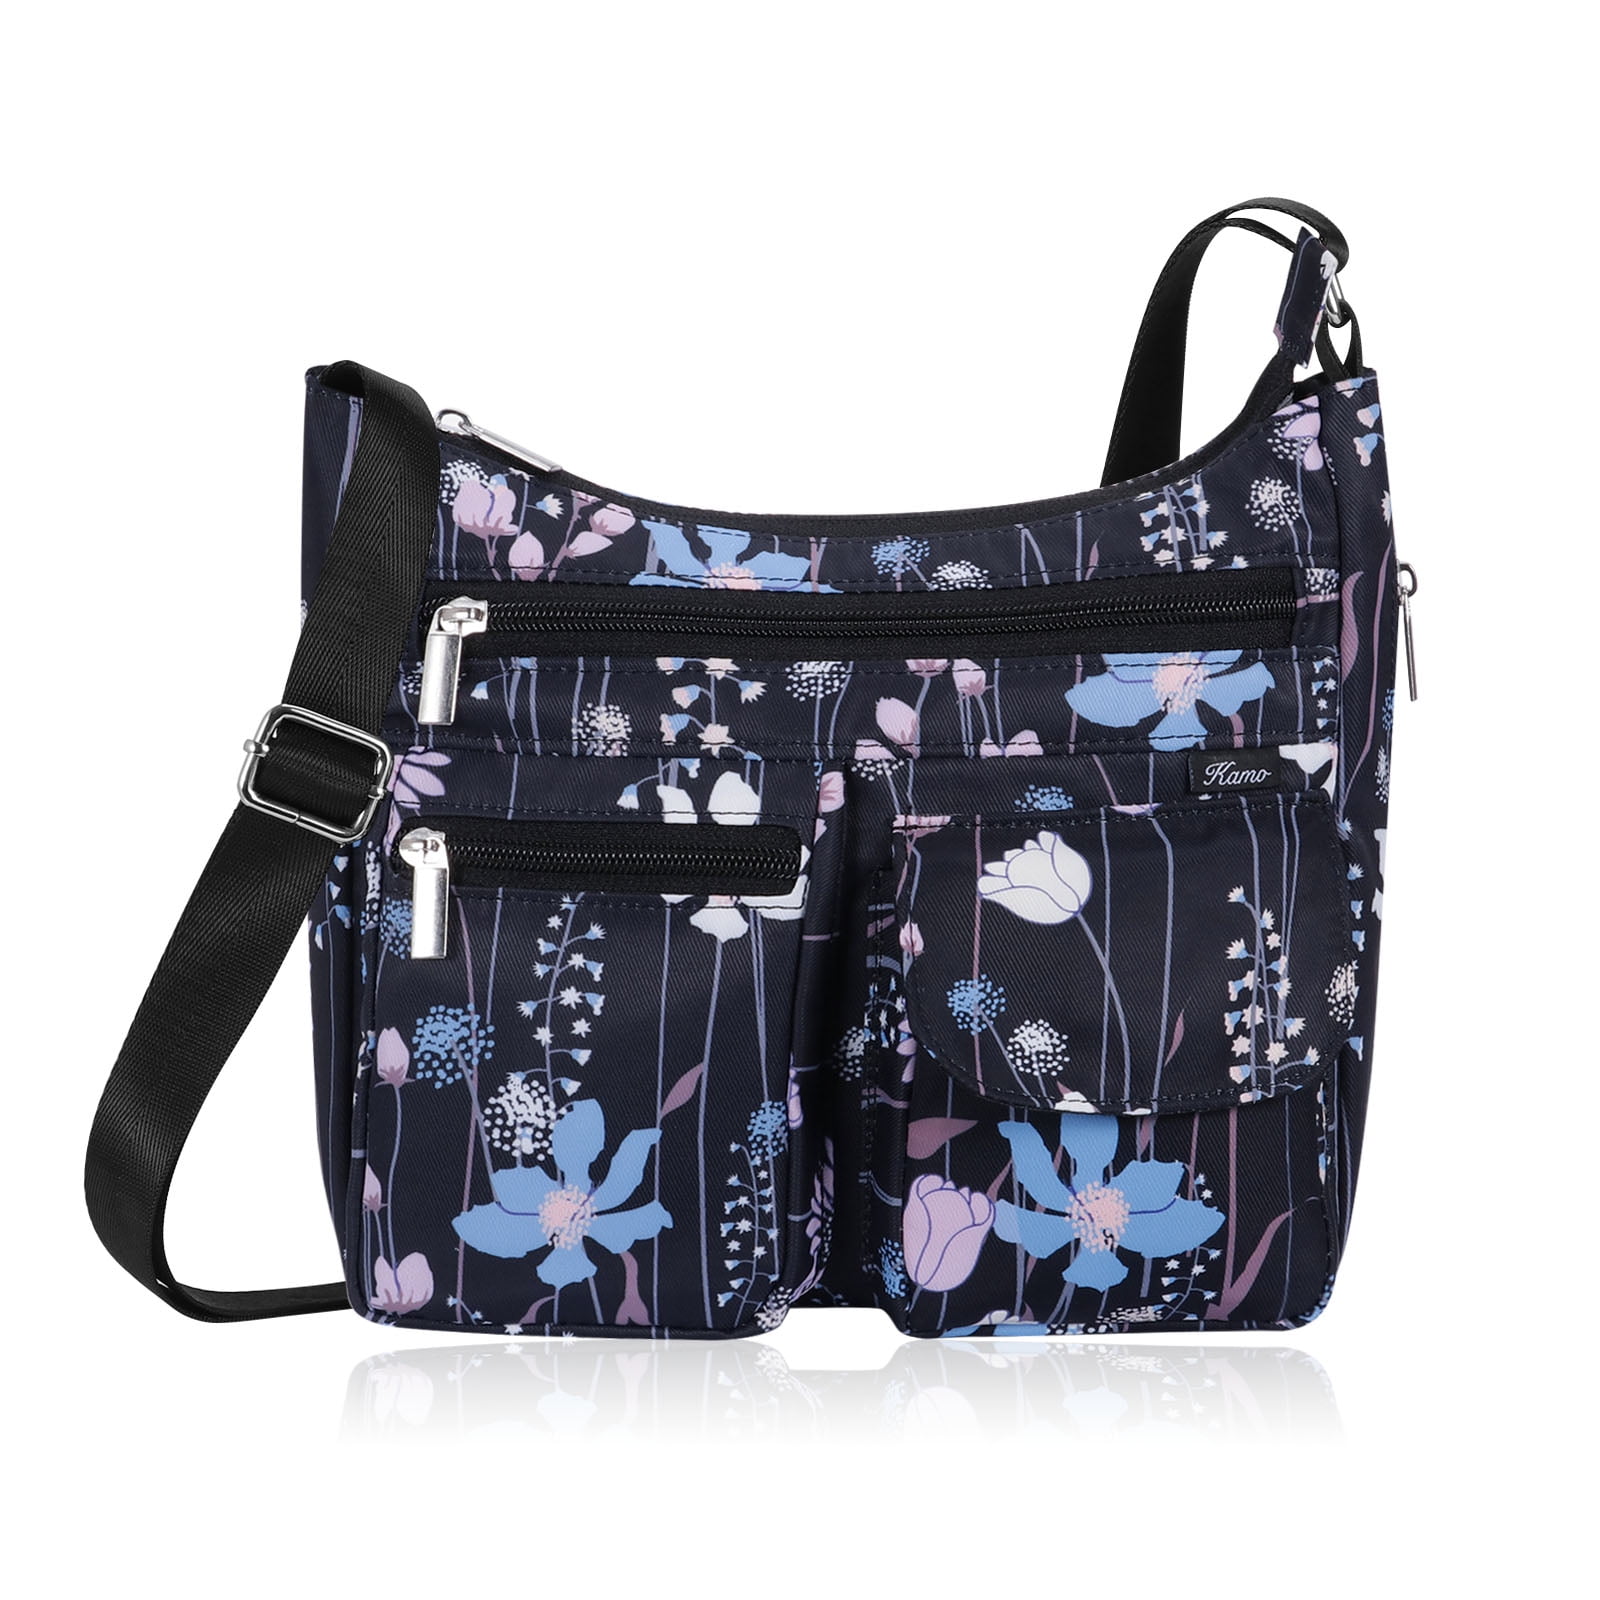 Crossbody Bag for Women Multi pocket Shoulder Bag Lightweight Messenger Bag Casual printed Purse Handbag Travel Bag c00734d7 95b3 4d0c bc0d 77885843d7b8.003d5bfdf2d44dd8fdd6c2c0707381a8